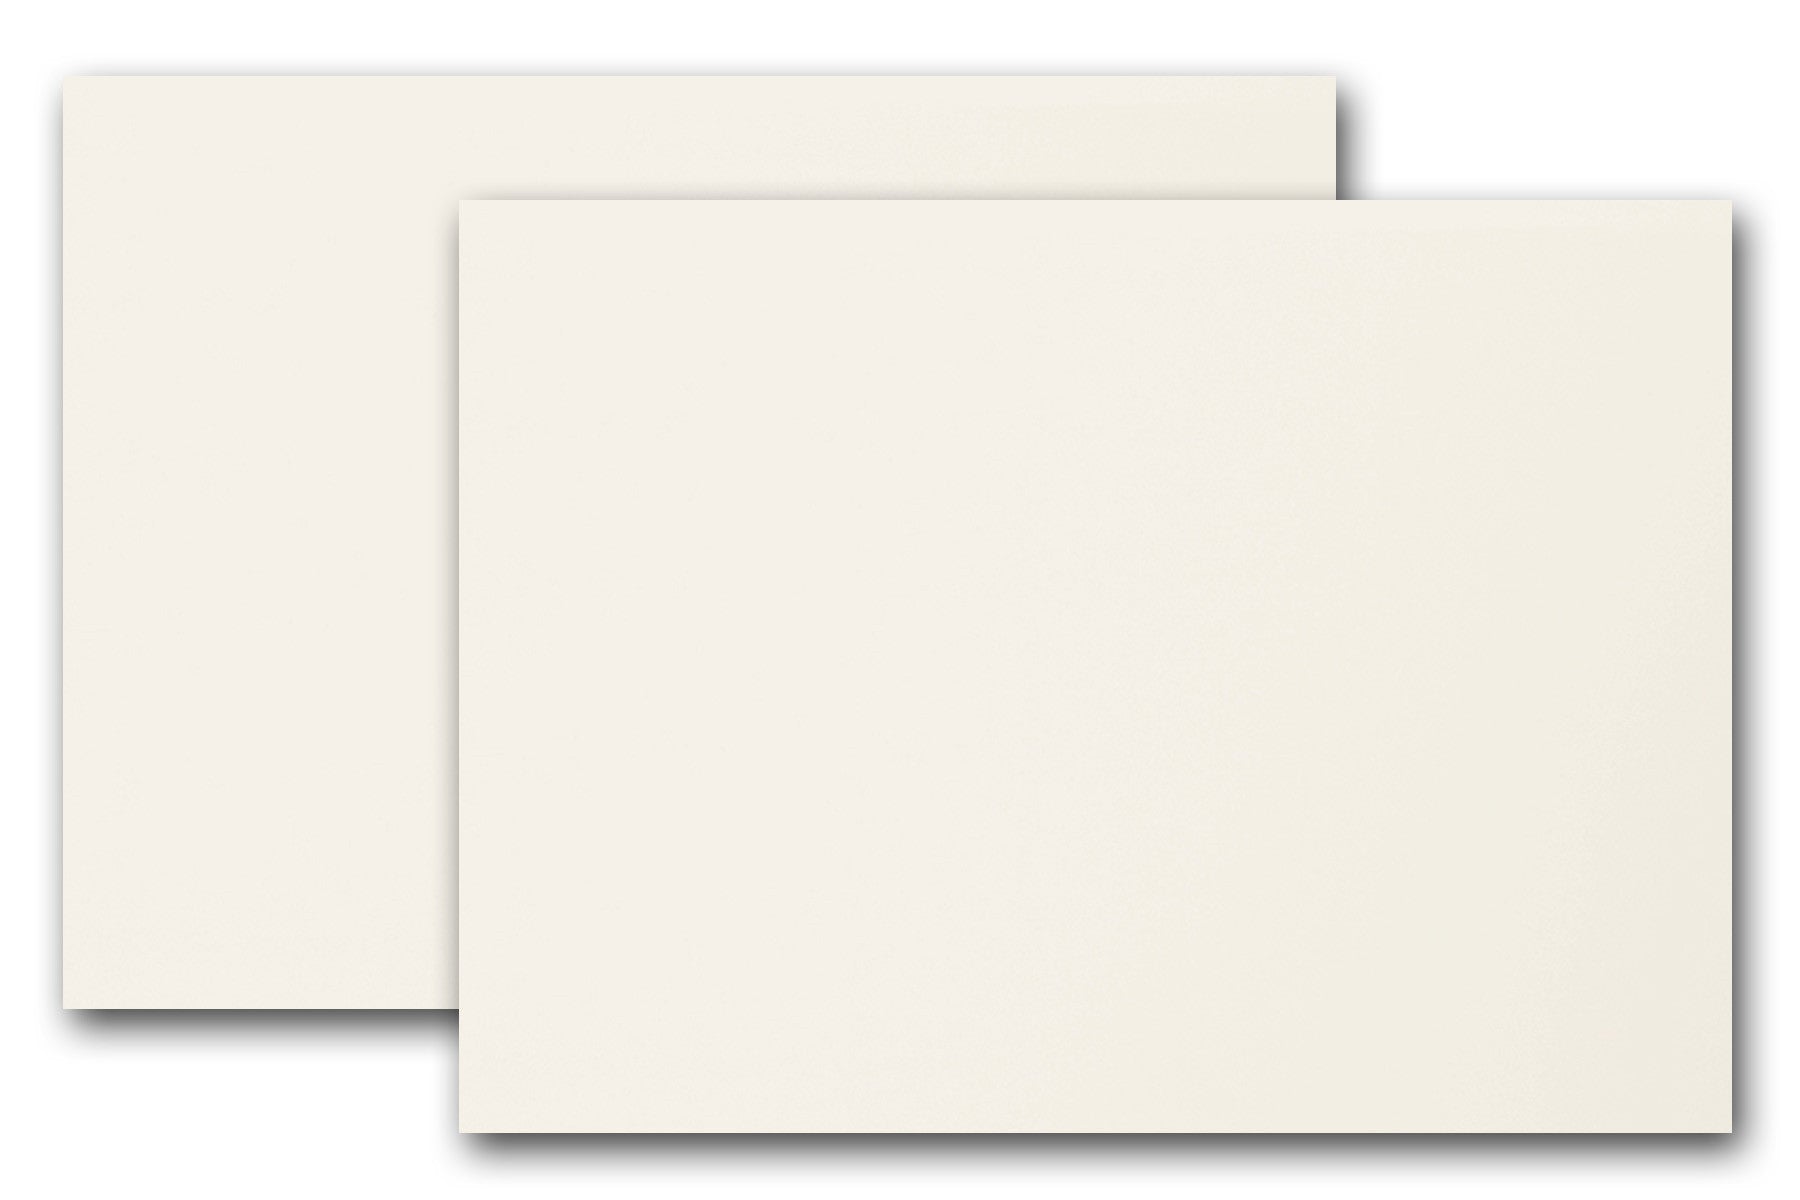 Bulk Blank Postcards, 4x6 Blank Postcards, Blank Note Cards, White